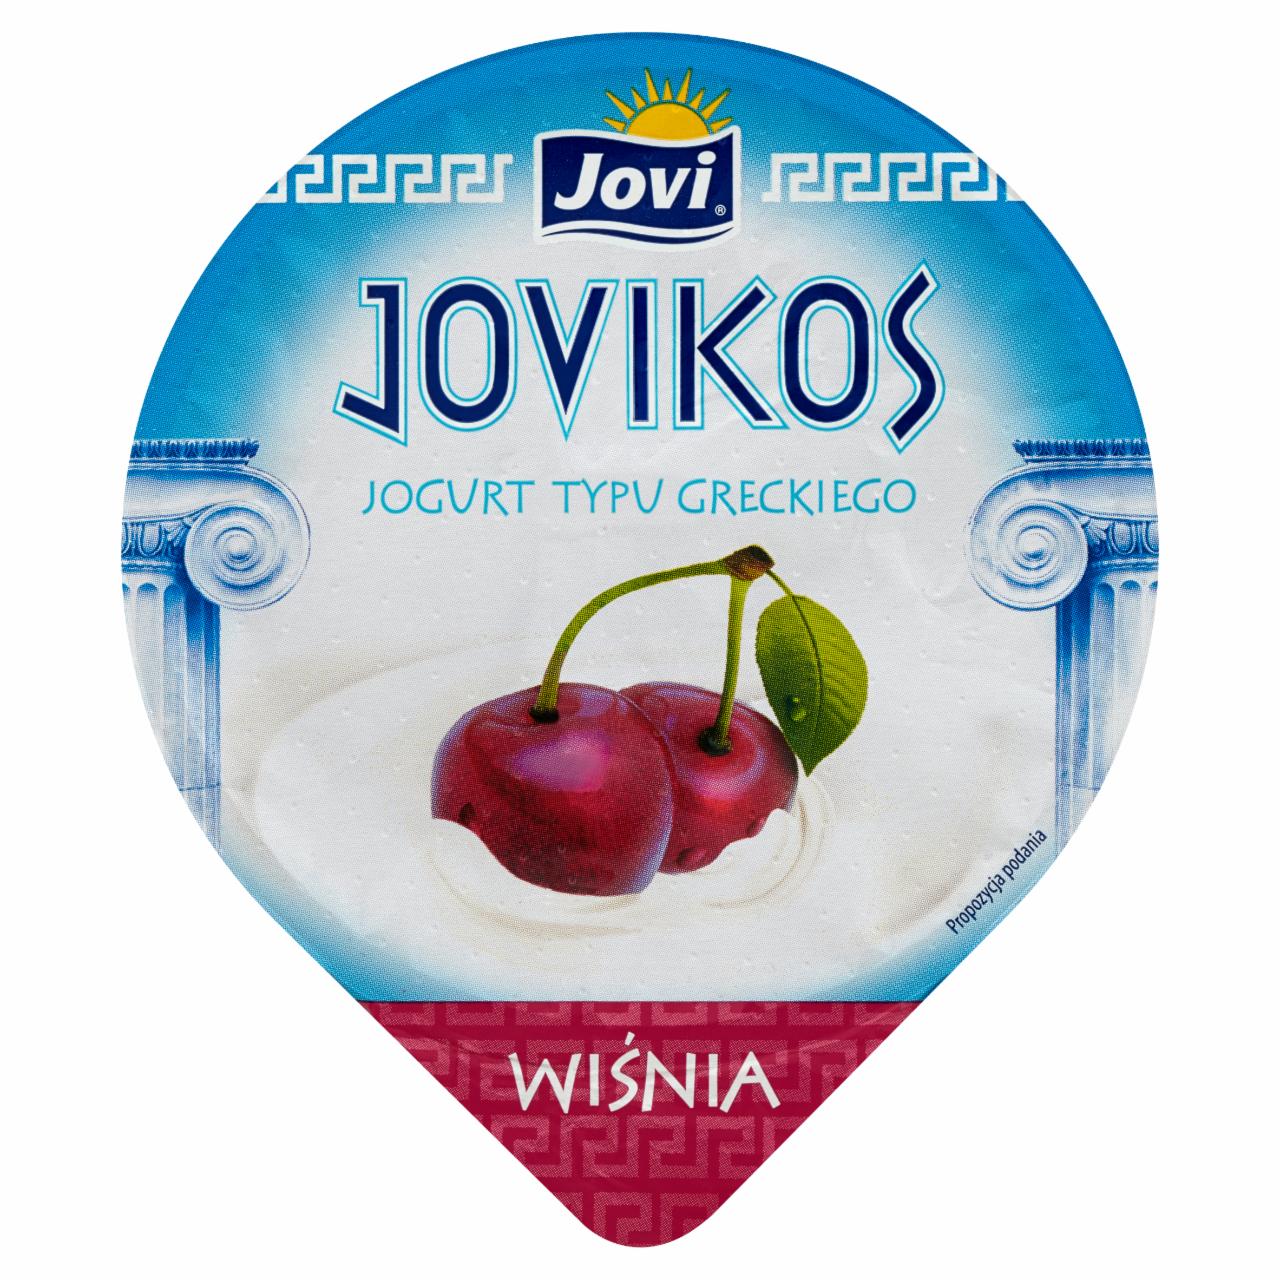 Zdjęcia - Jovi Jovikos Jogurt typu greckiego wiśnia 150 g